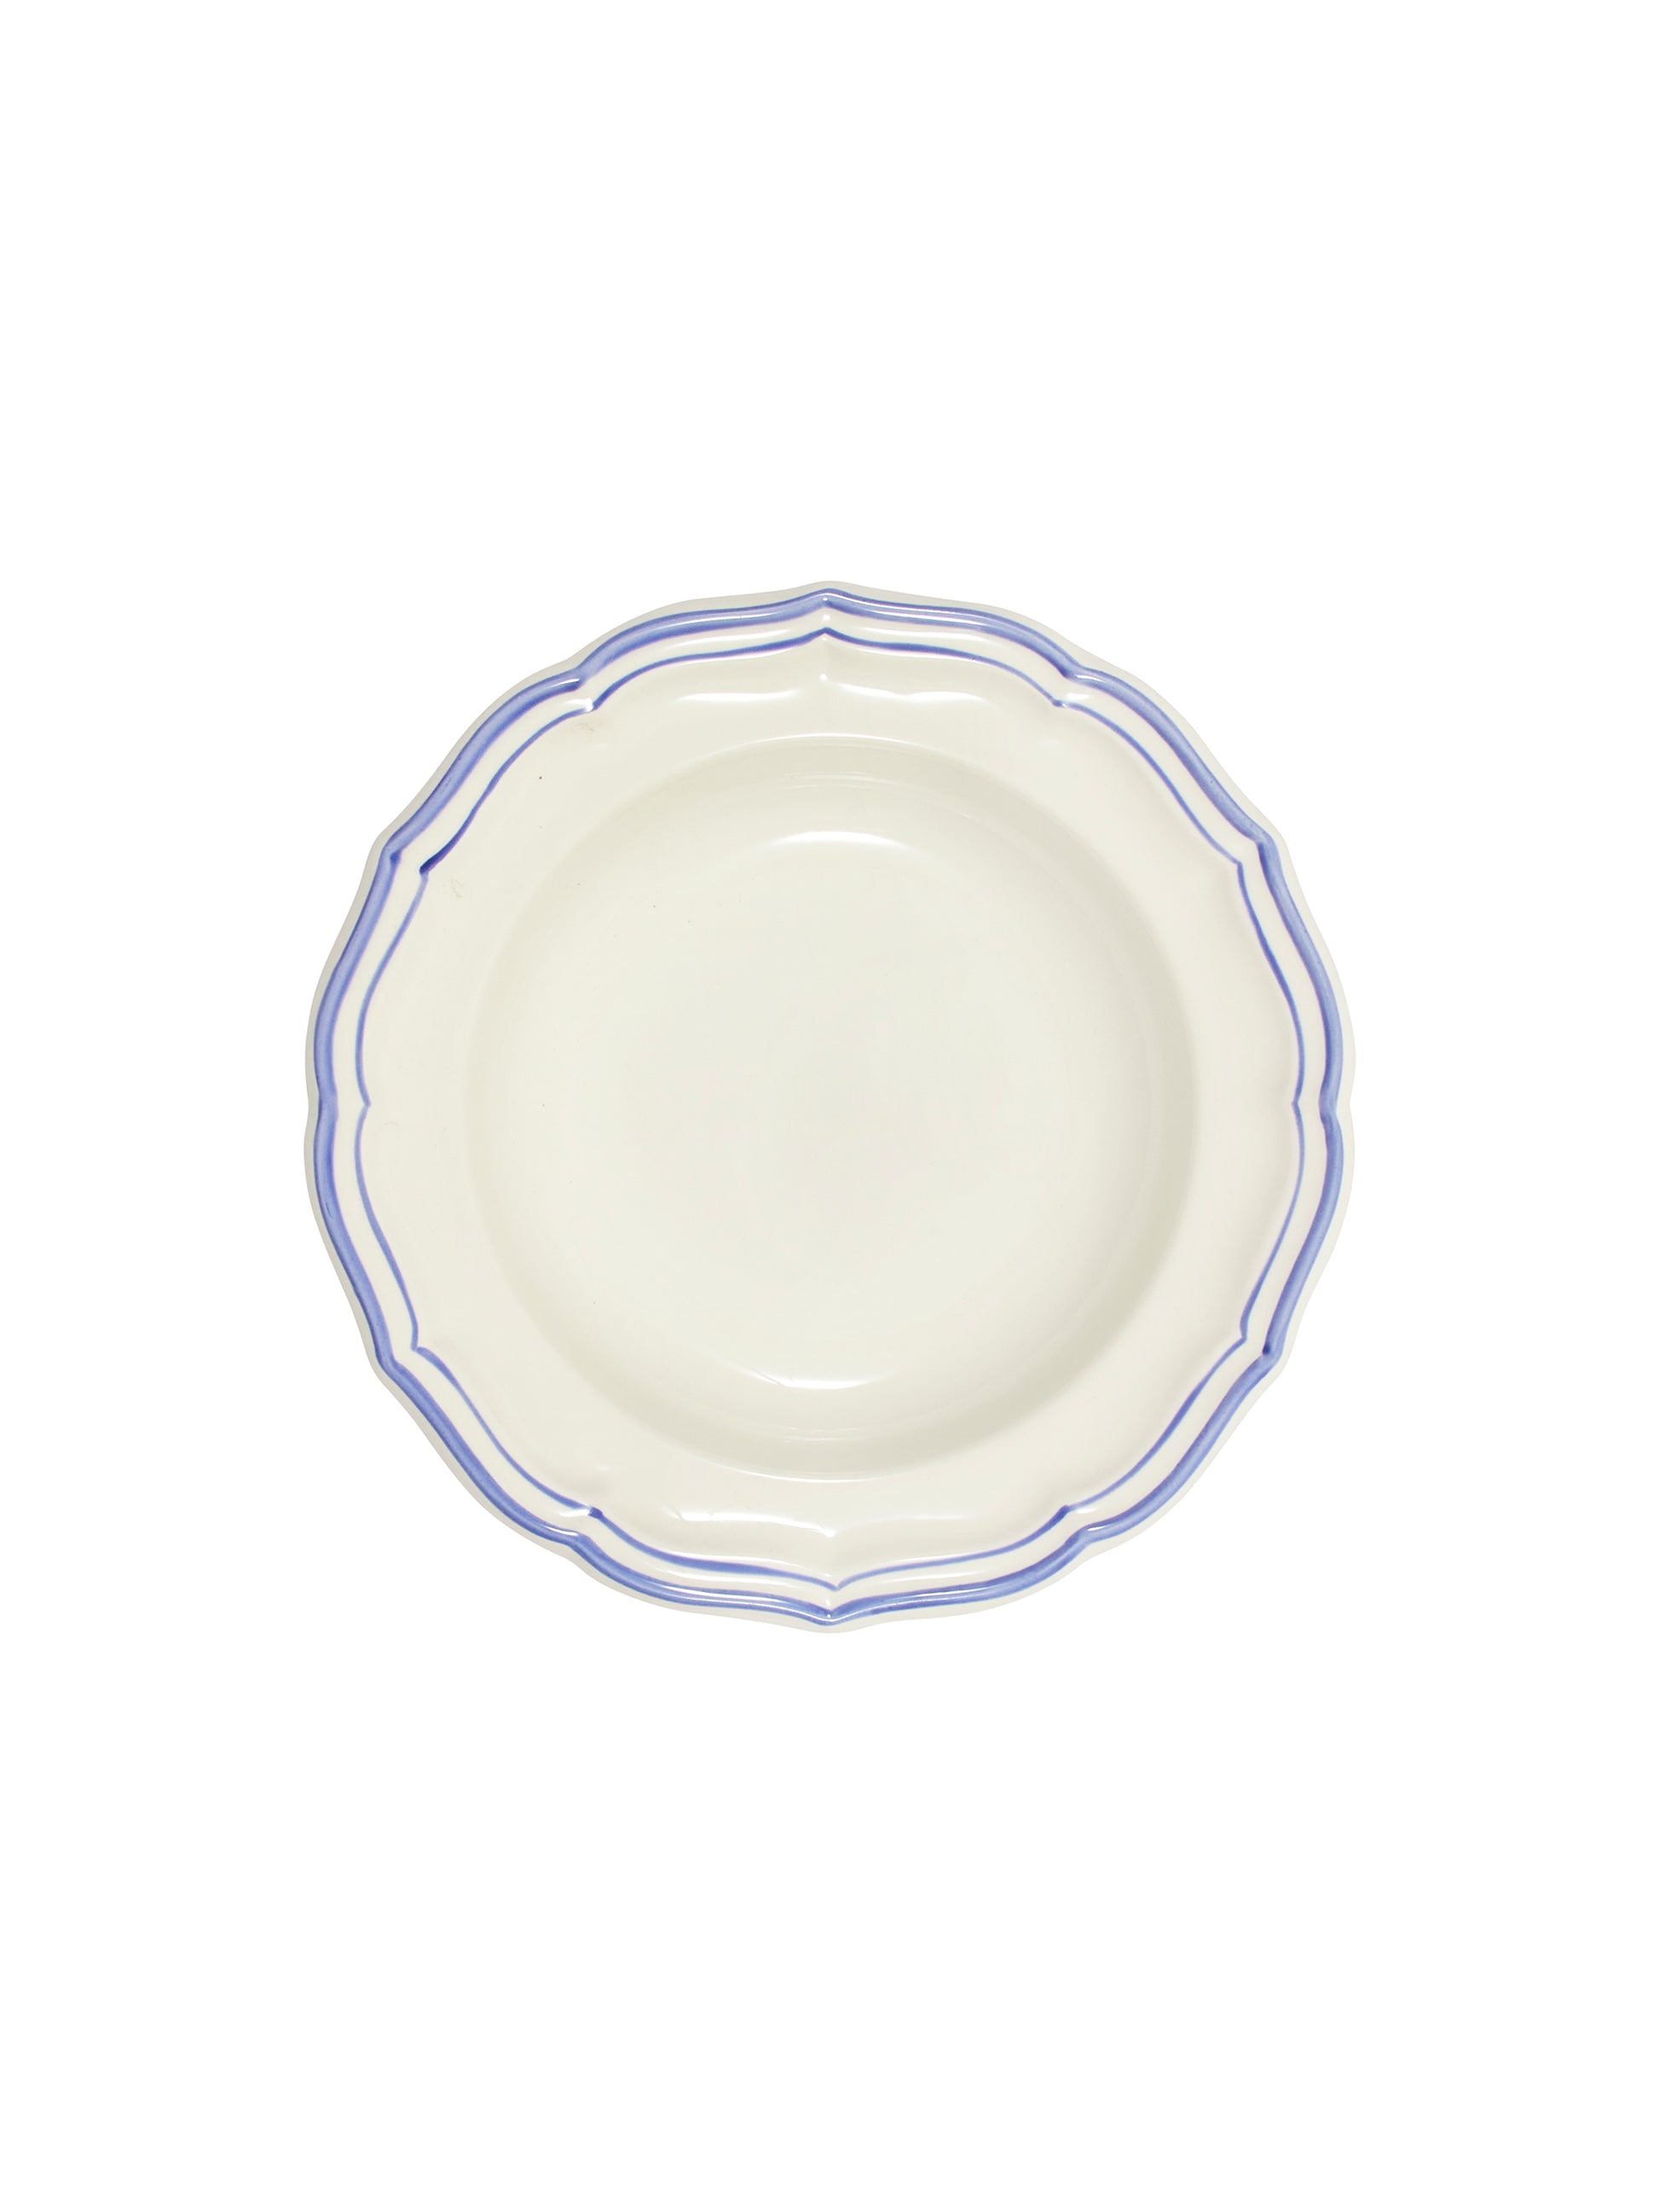 Gien Filet Bleu Soup Plate Weston Table